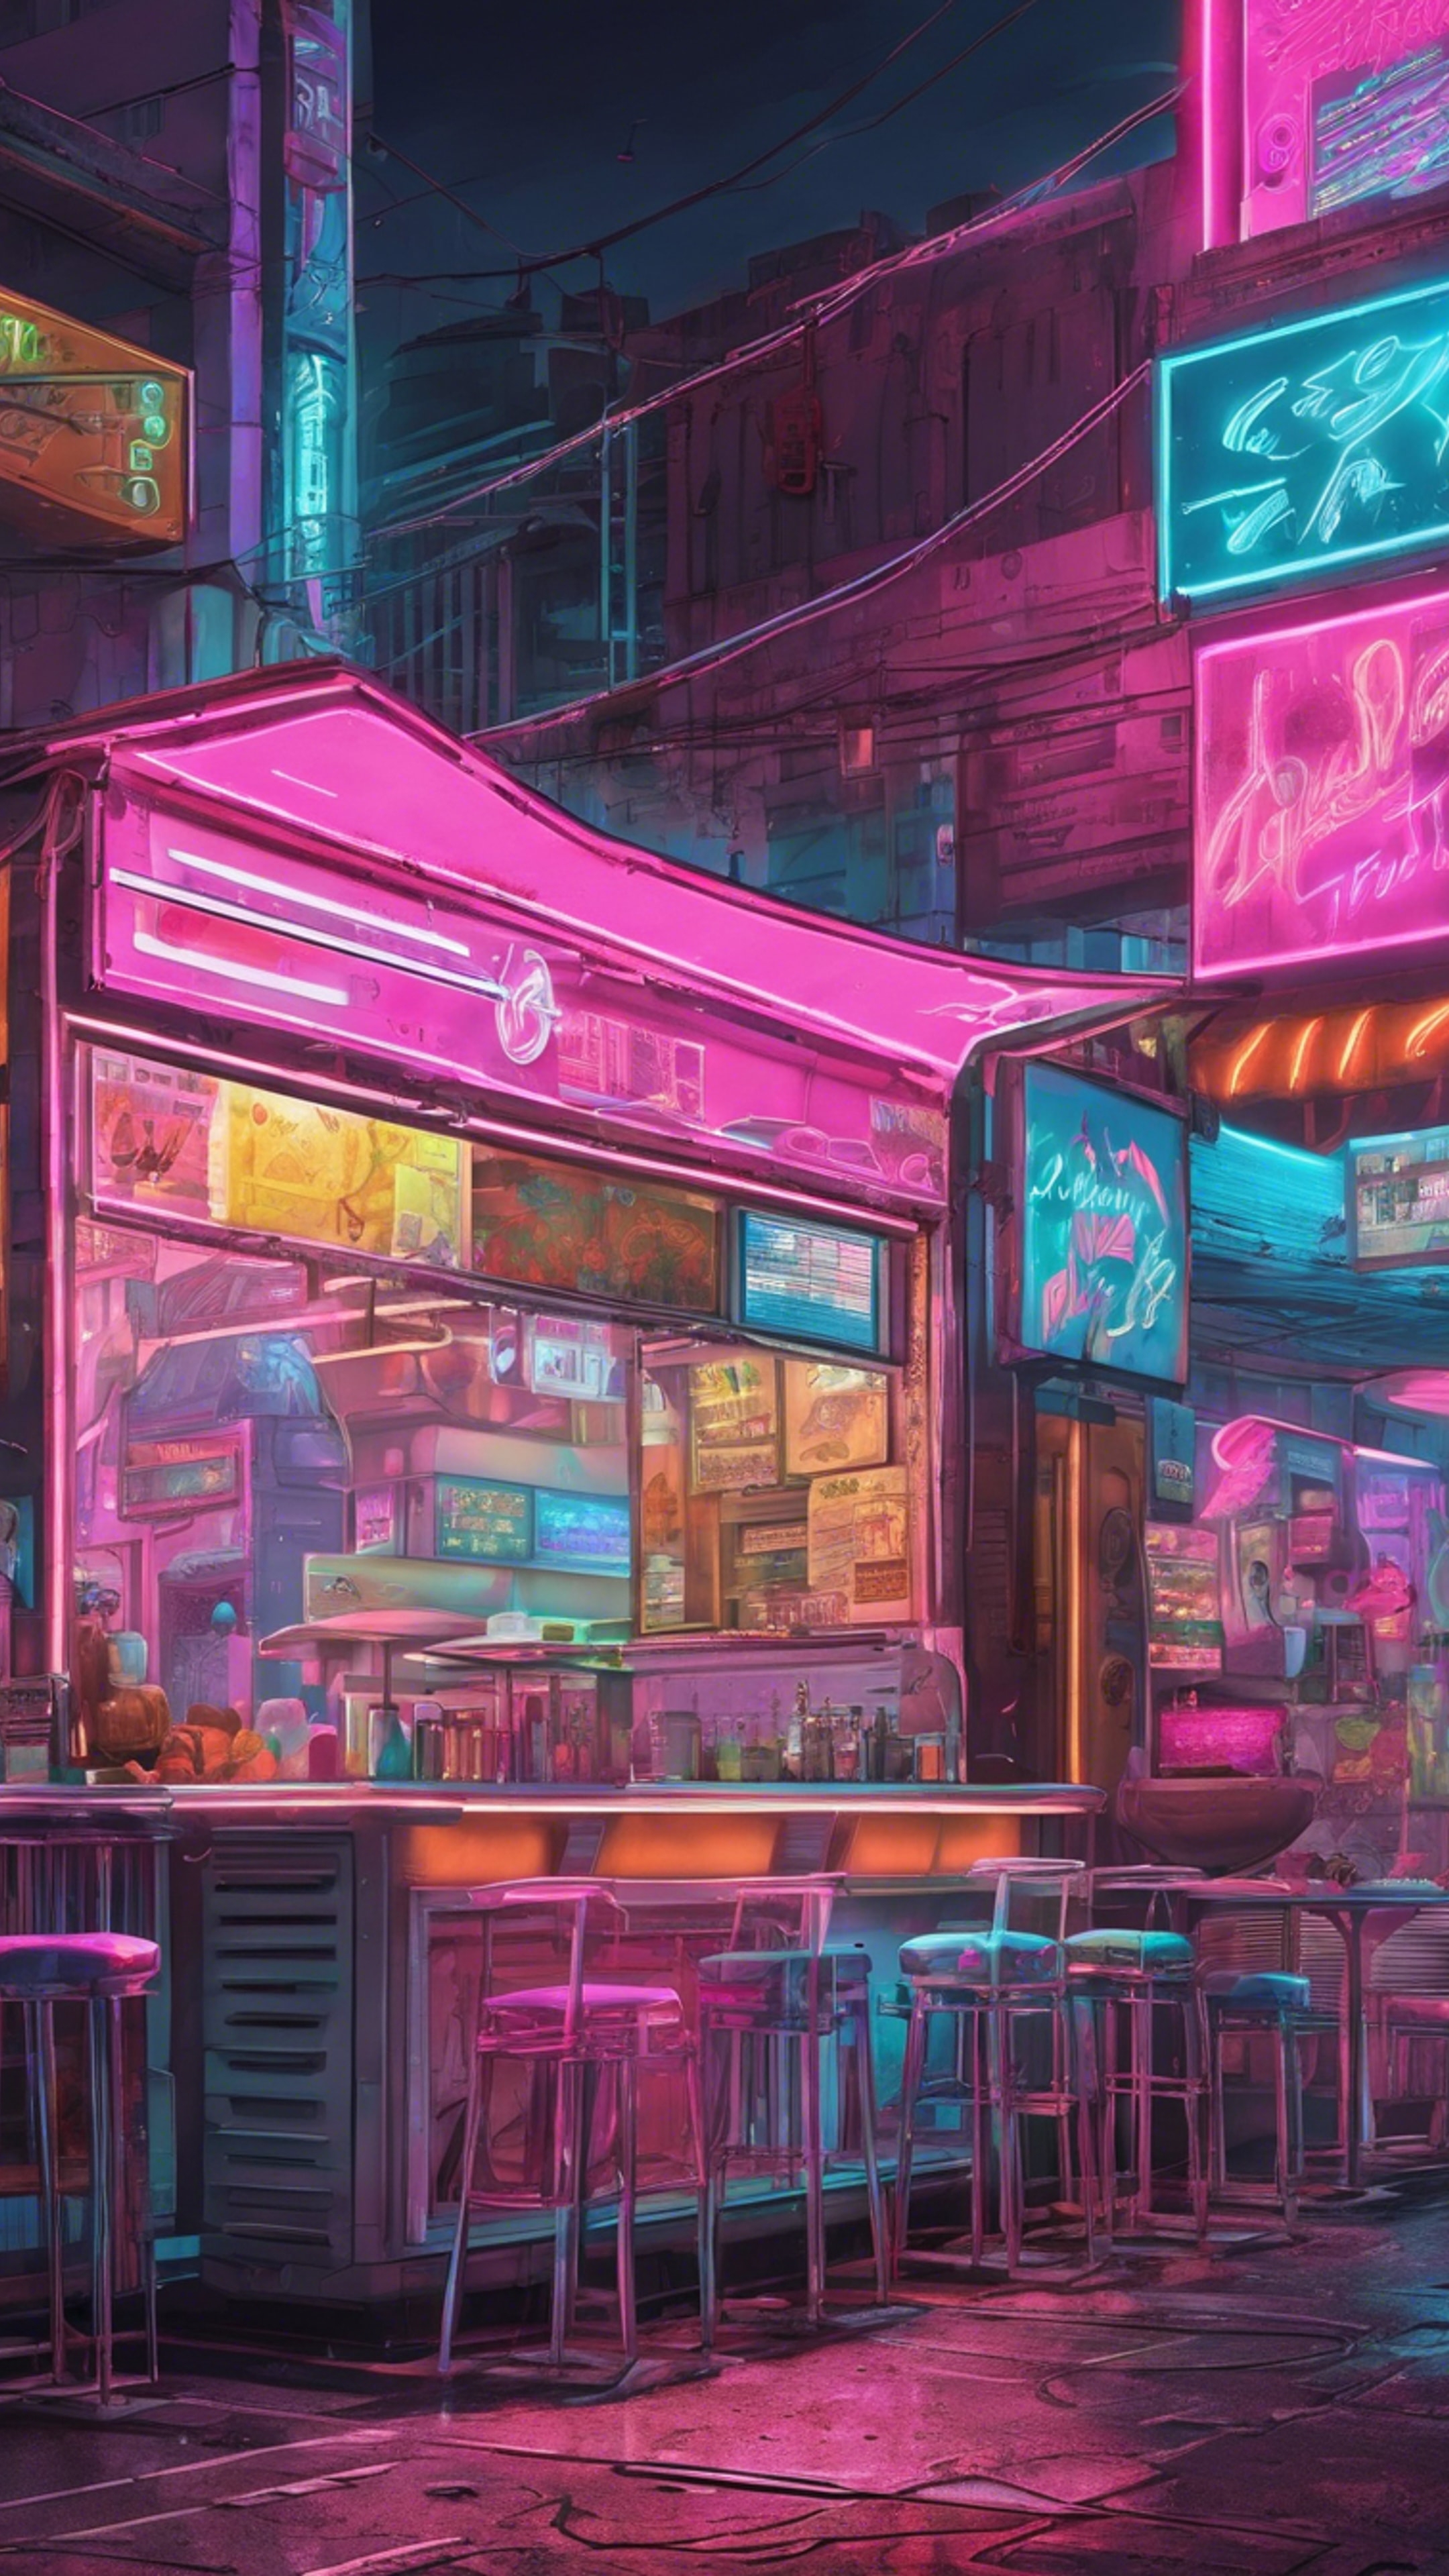 Night scene in a city where cyberpunk meets pastel at a popular street food stall. Tapeta[607f993b19214cf28e30]